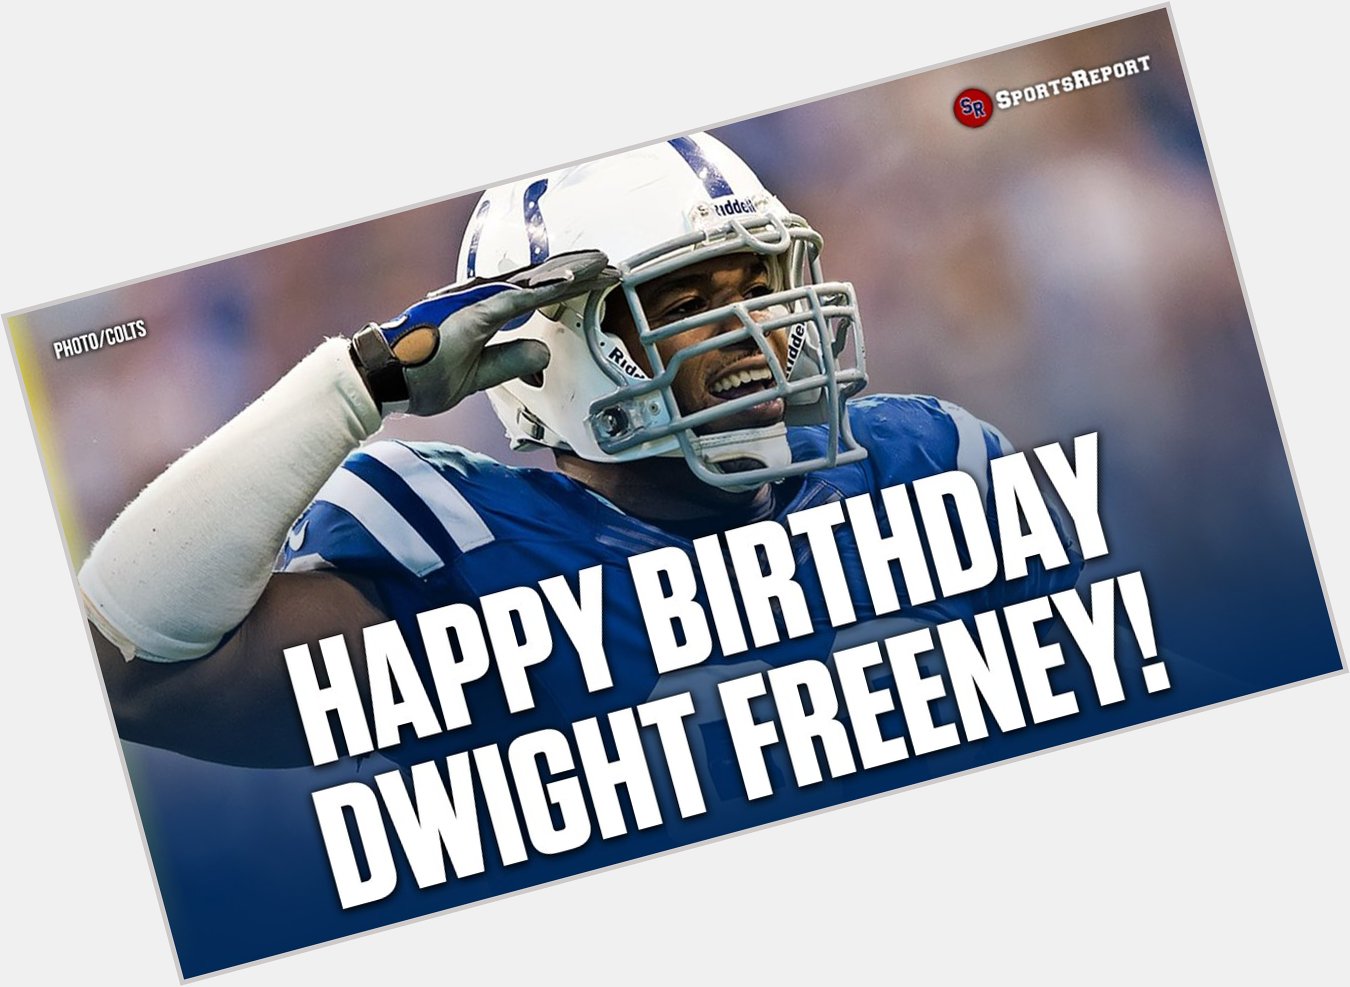 Colts Fans, let\s wish Legend Dwight Freeney a Happy Birthday! 